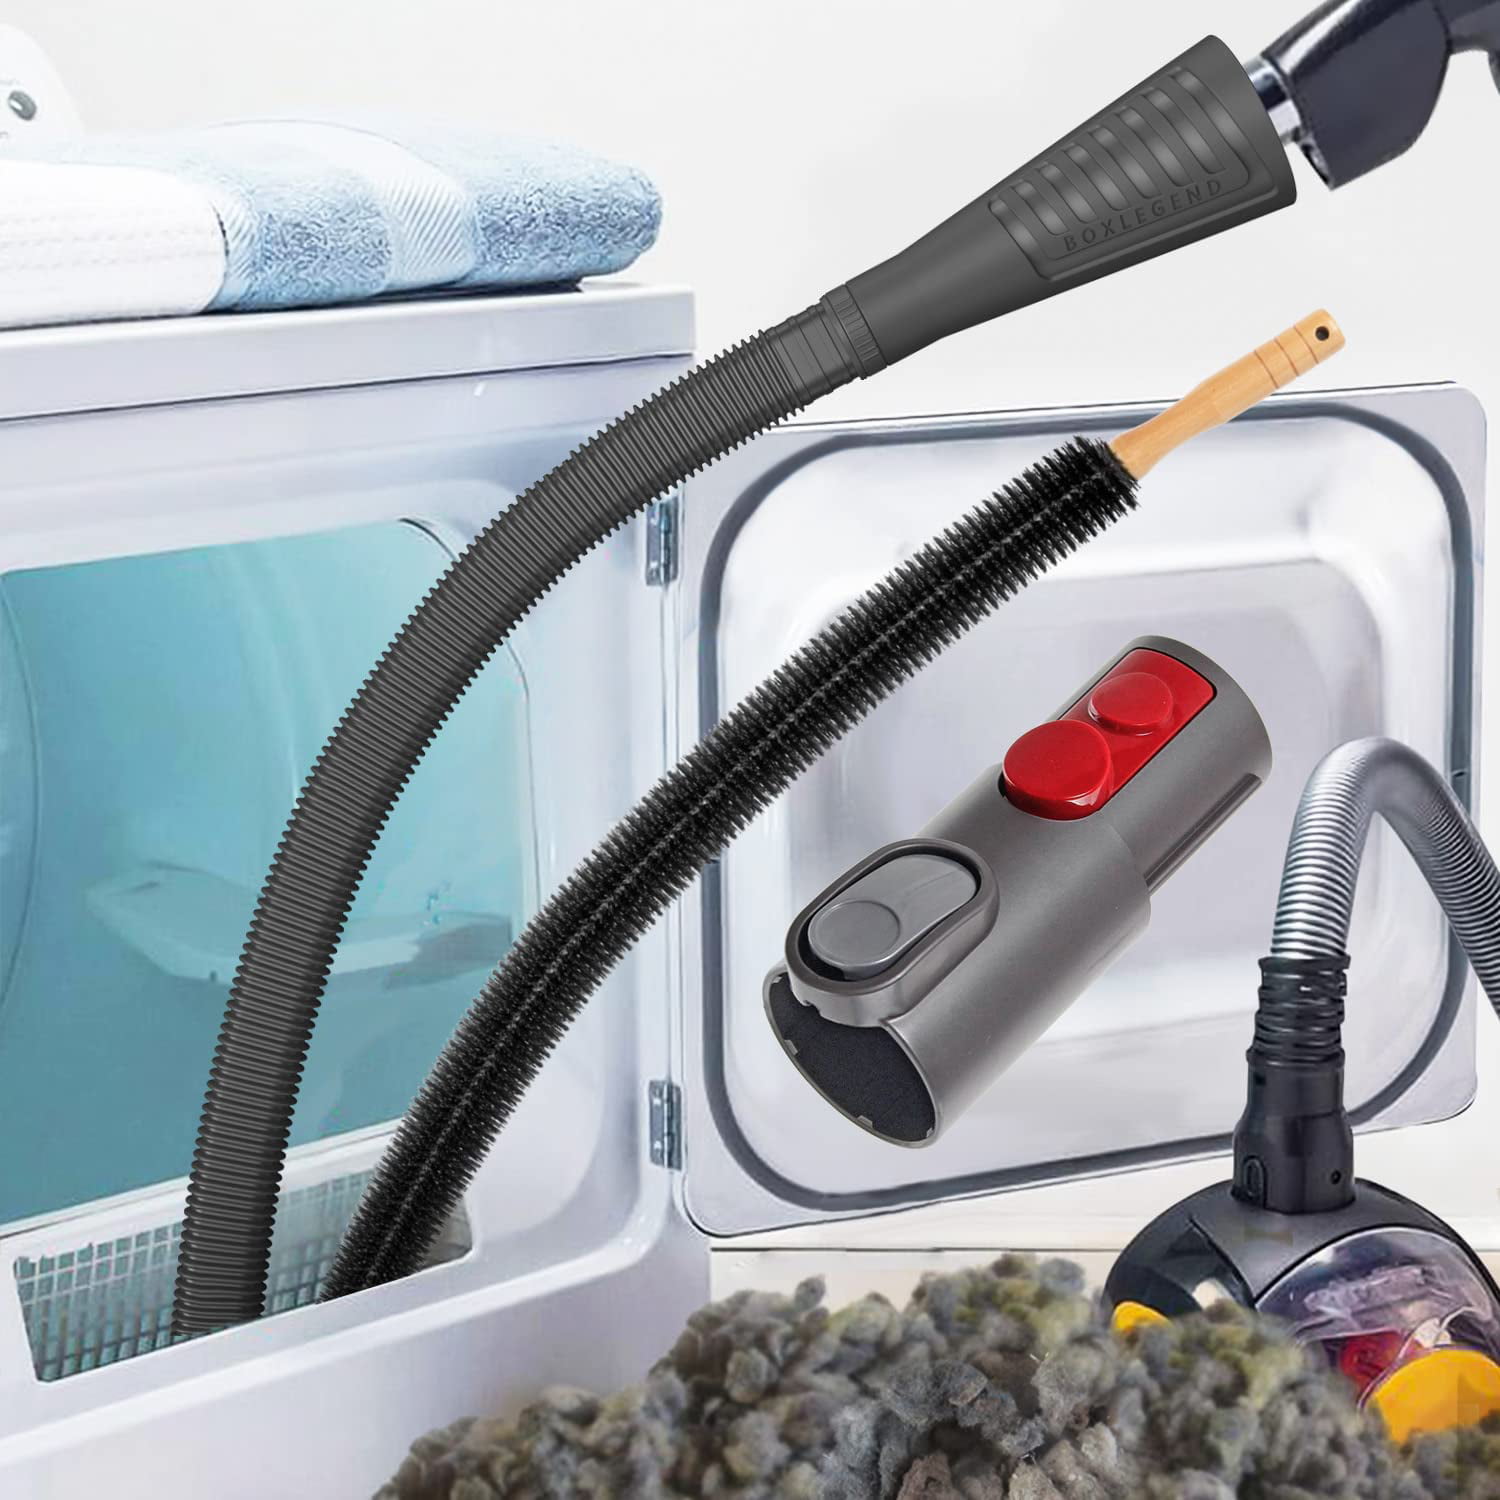 Dryer Vent Cleaning Kit Contains Vacuum Hose Attachment Hose 